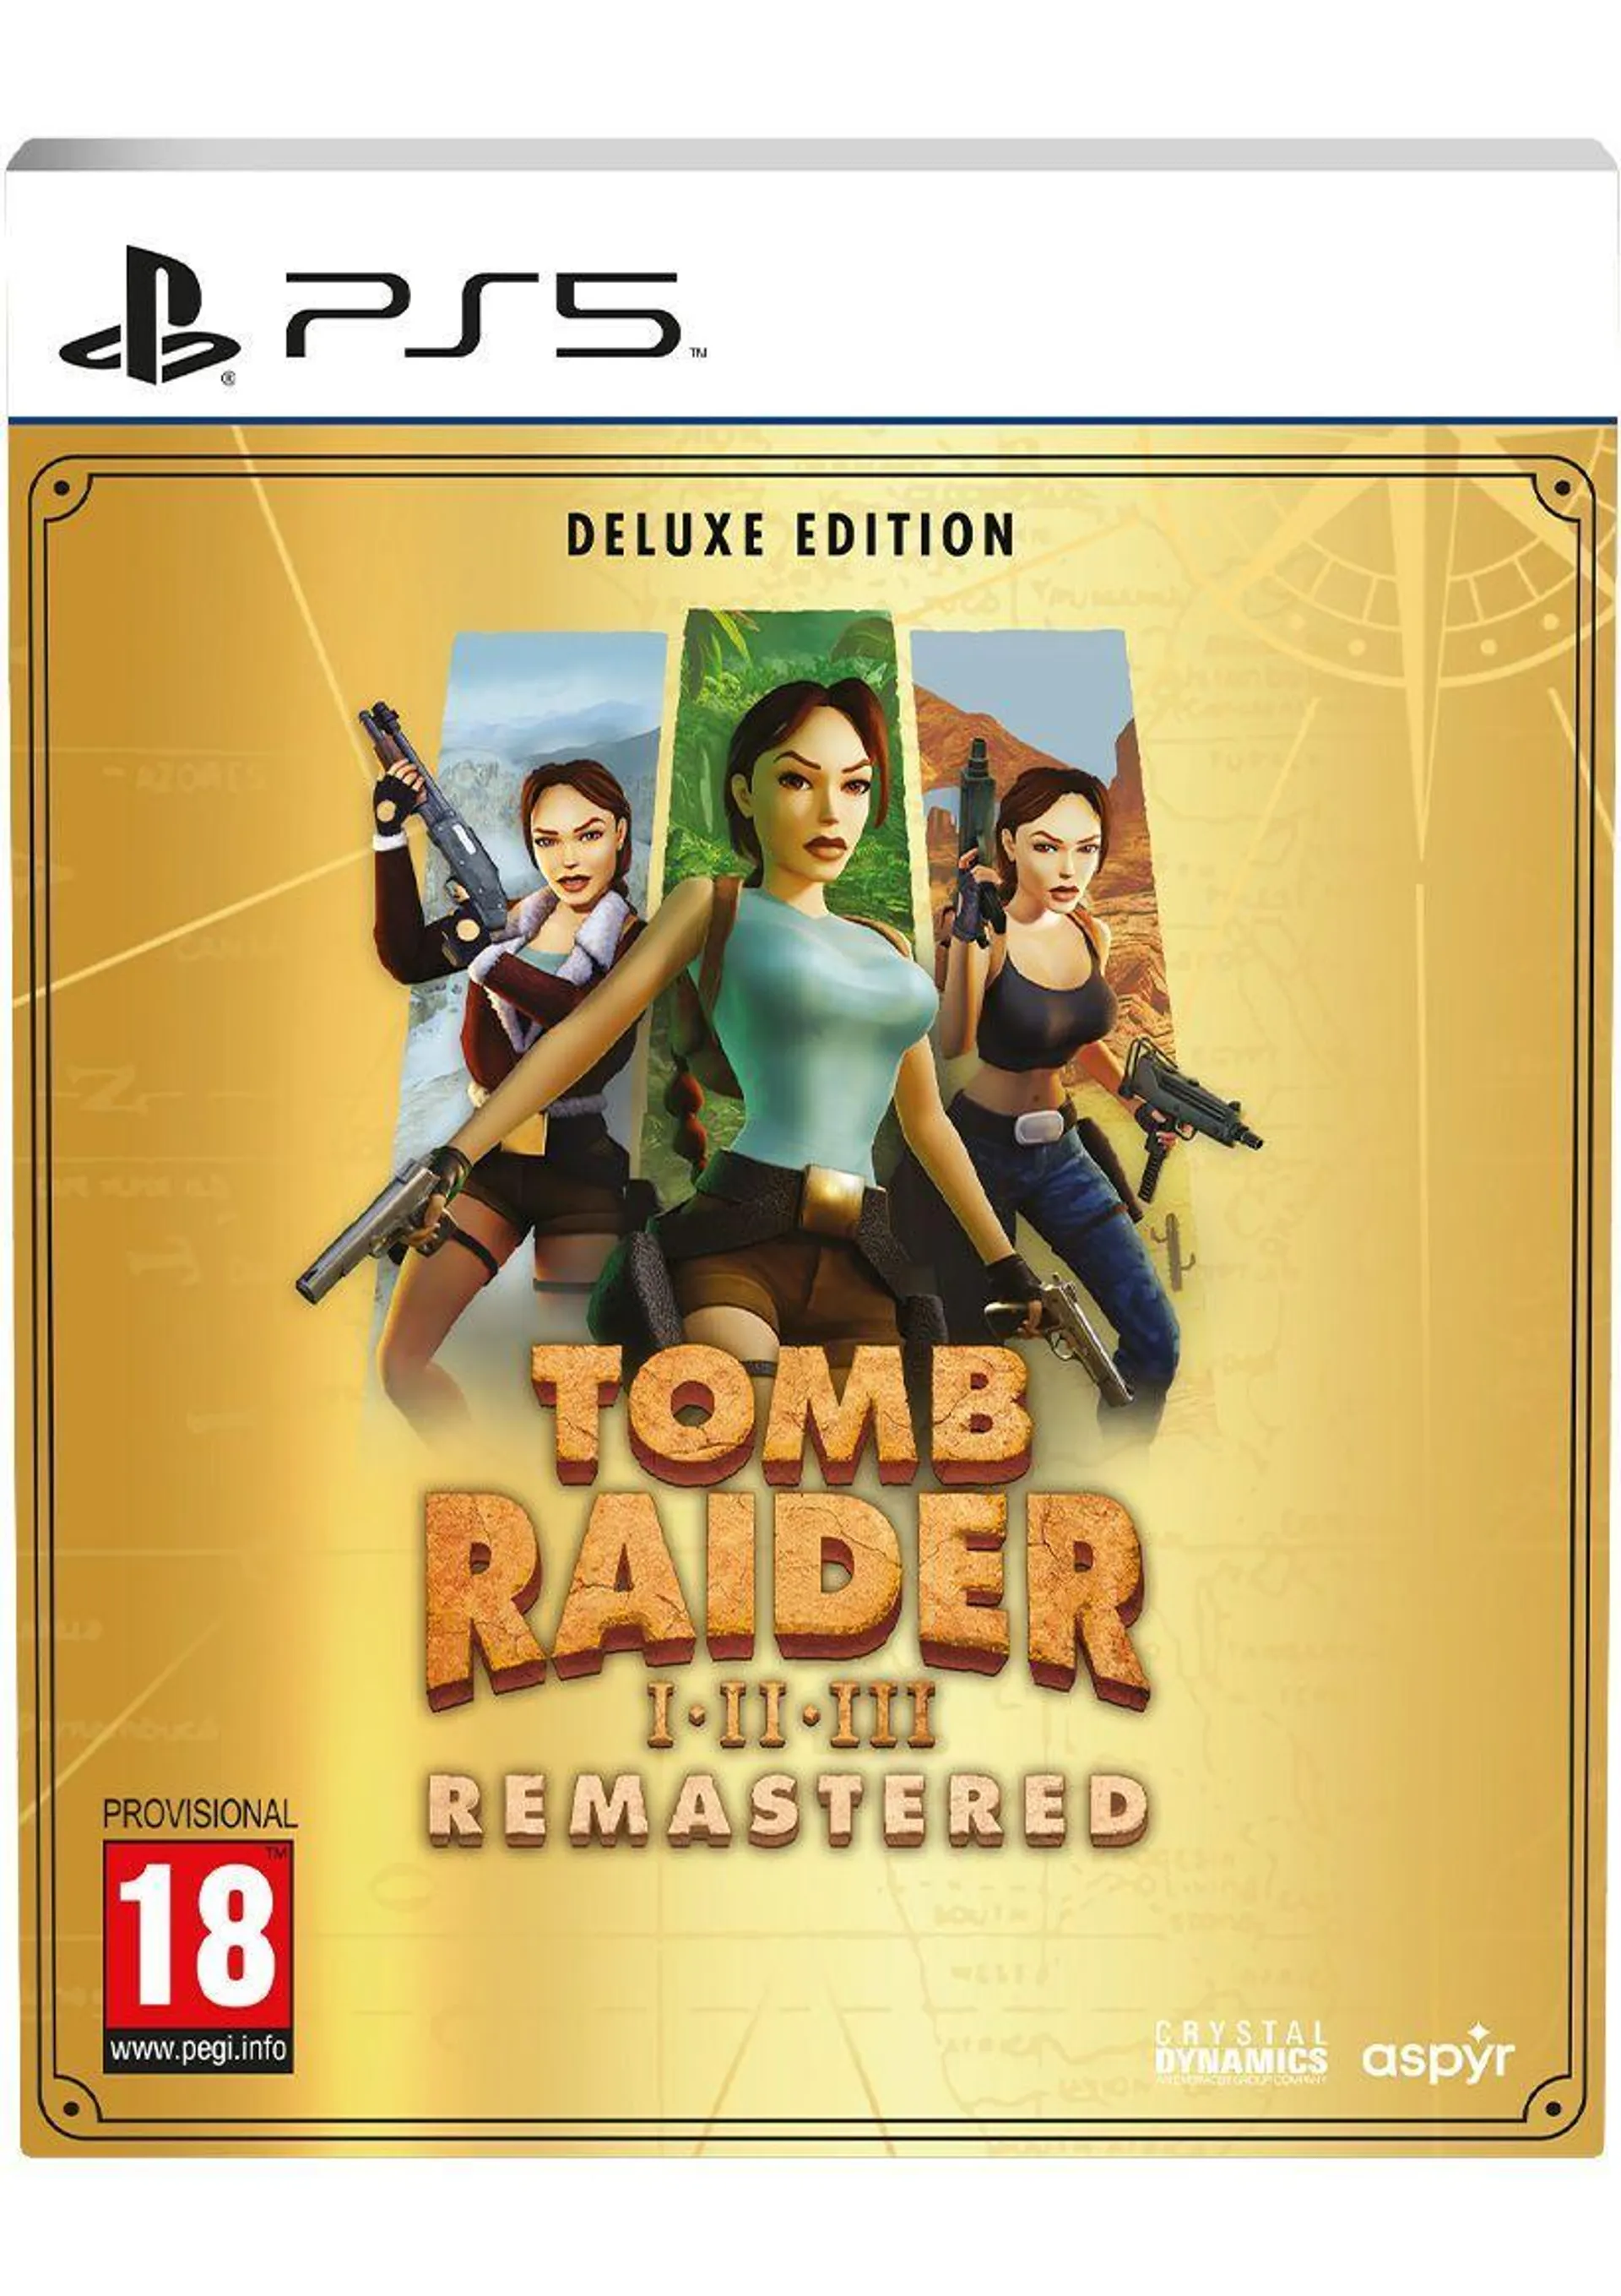 Tomb Raider I-III Remastered Starring Lara Croft: Deluxe Edition on PlayStation 5